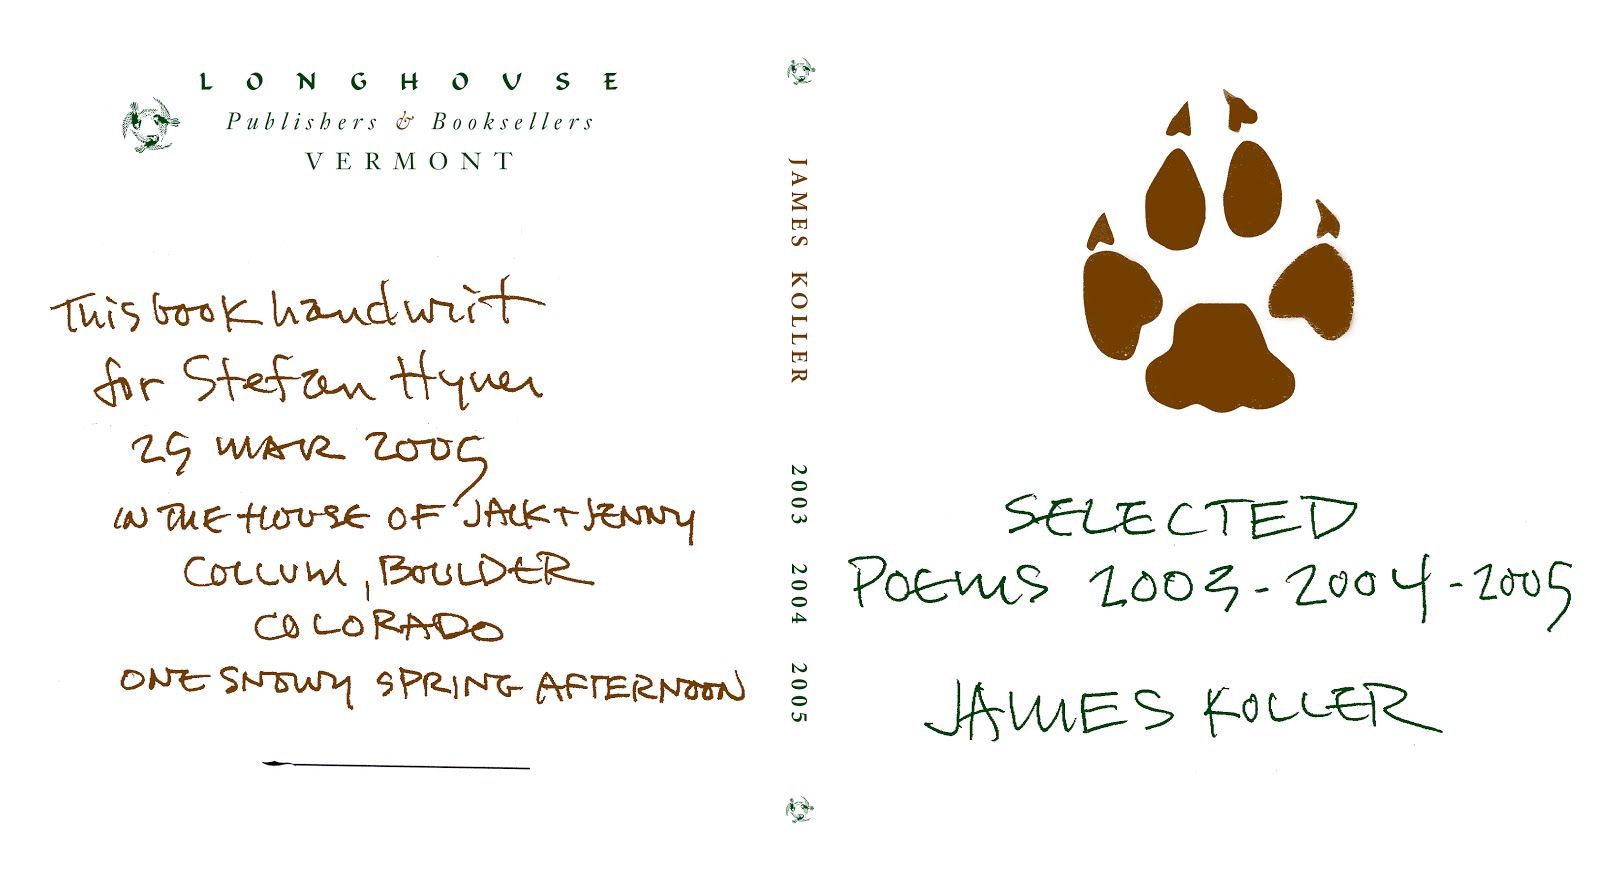 New! James Koller : Selected Poems  2003-2004-2005